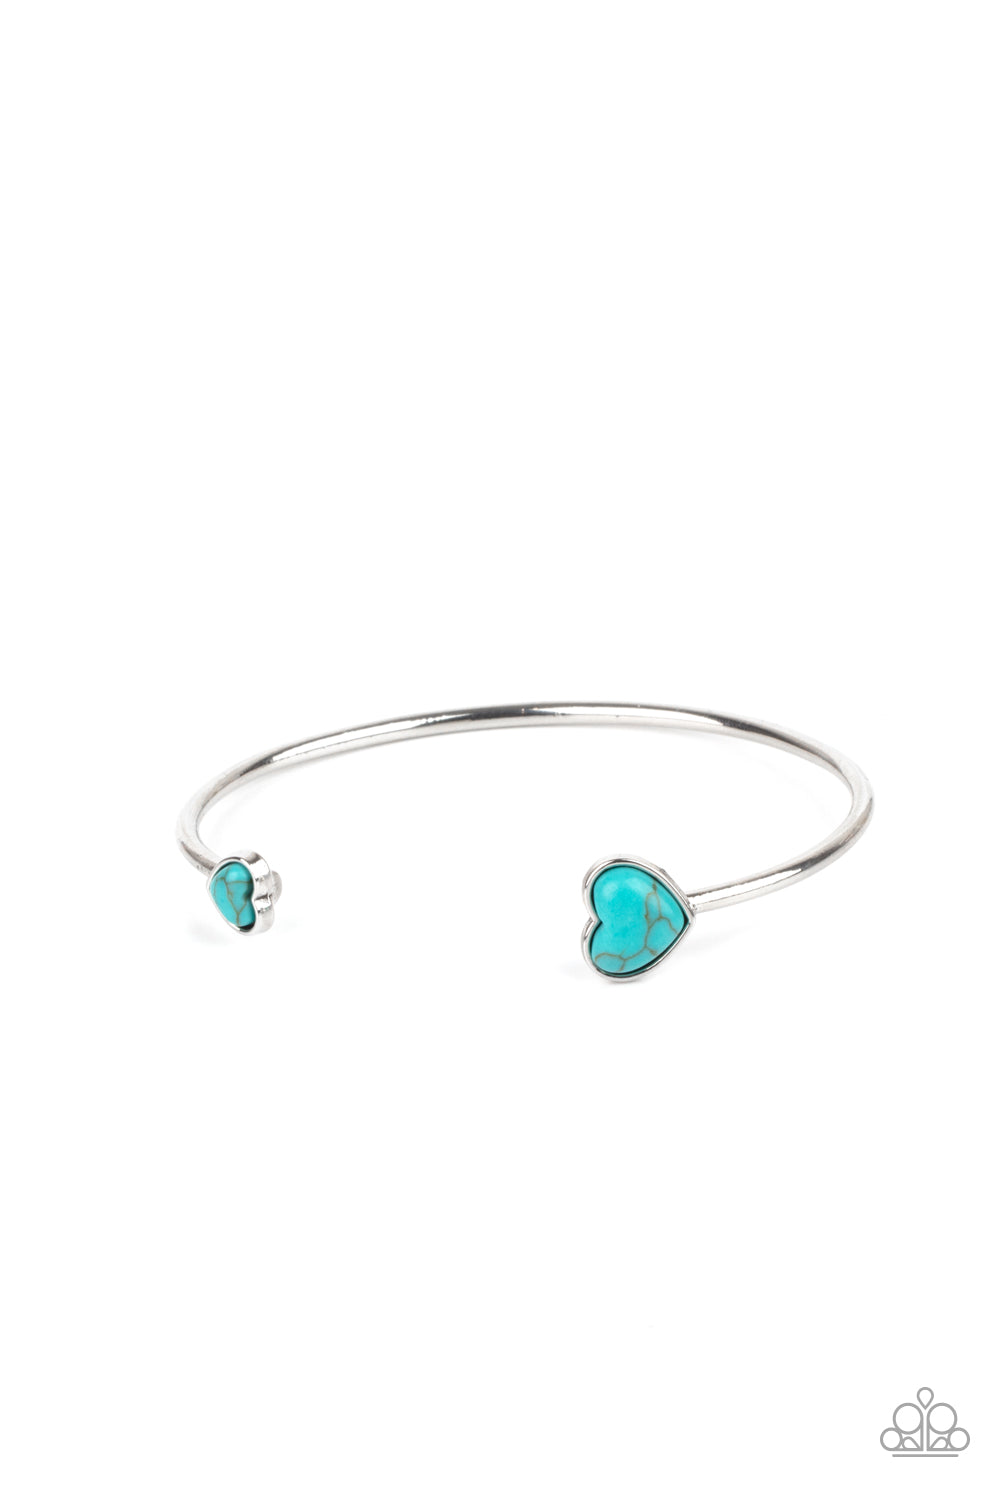 Romantically Rustic - Blue Stone Heart Bracelet - Princess Glam Shop